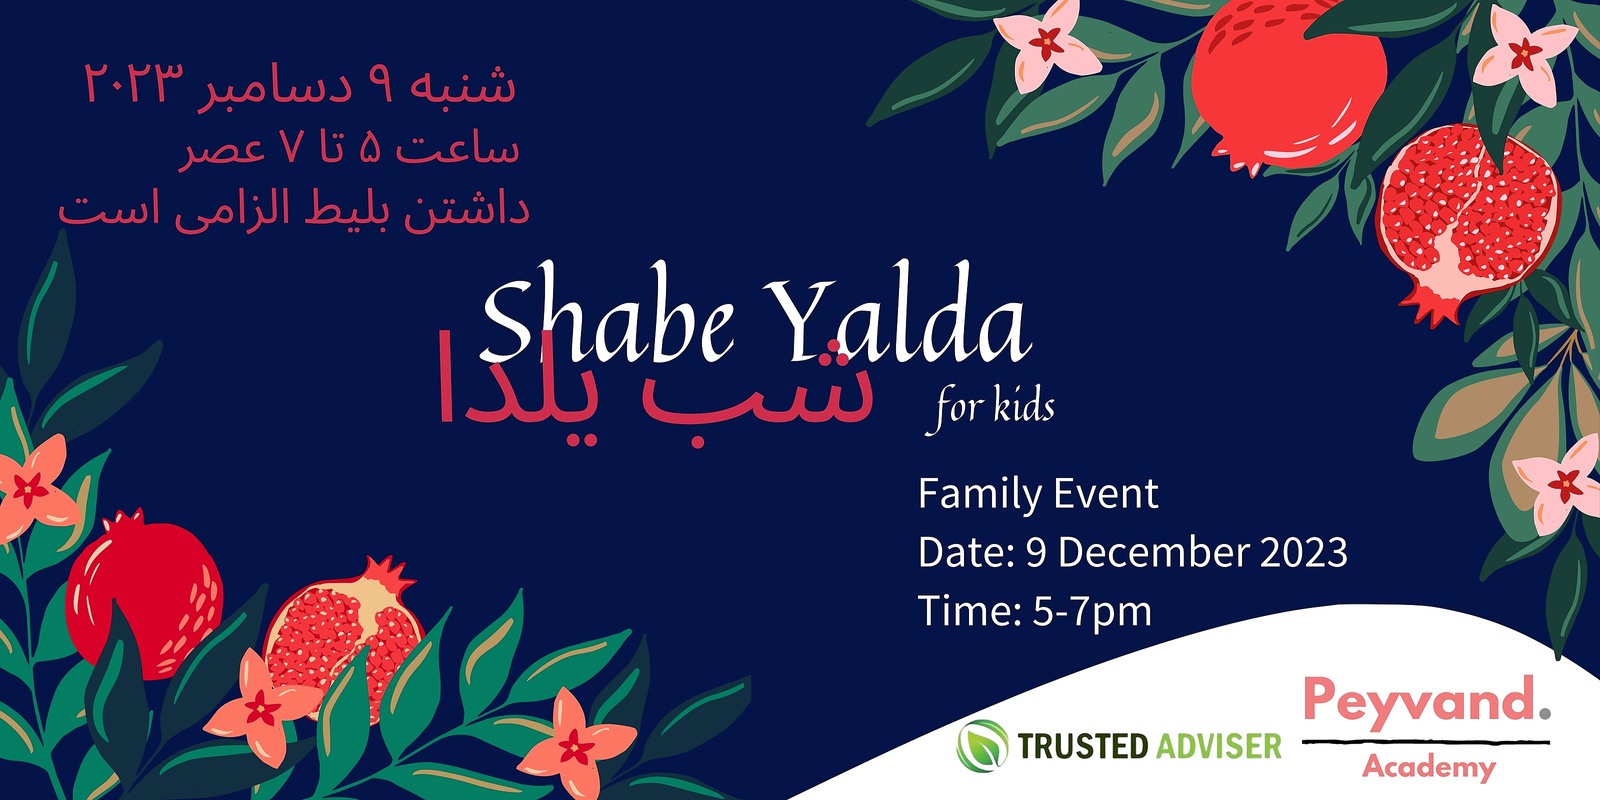 Banner image for Yalda night for children